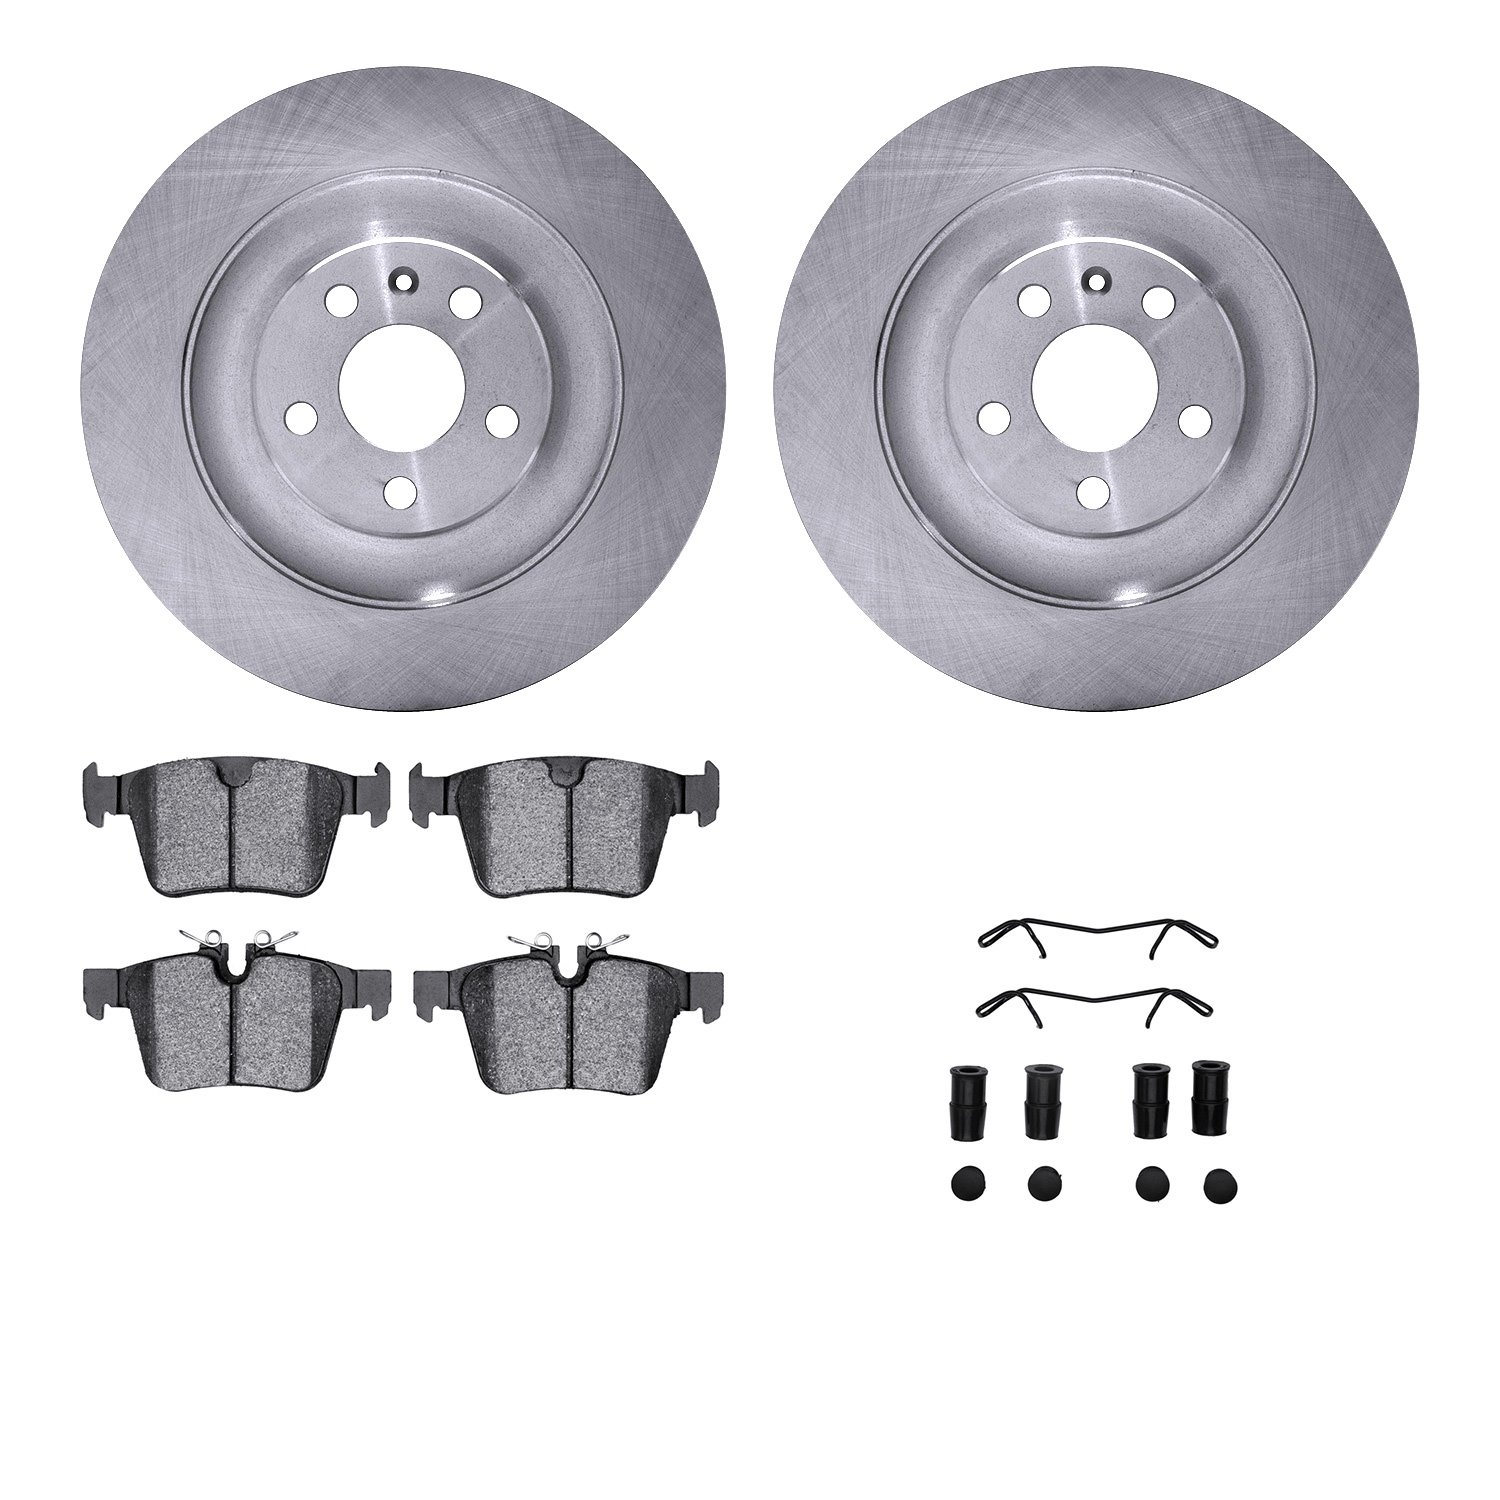 6612-27223 Brake Rotors w/5000 Euro Ceramic Brake Pads Kit with Hardware, Fits Select Multiple Makes/Models, Position: Rear